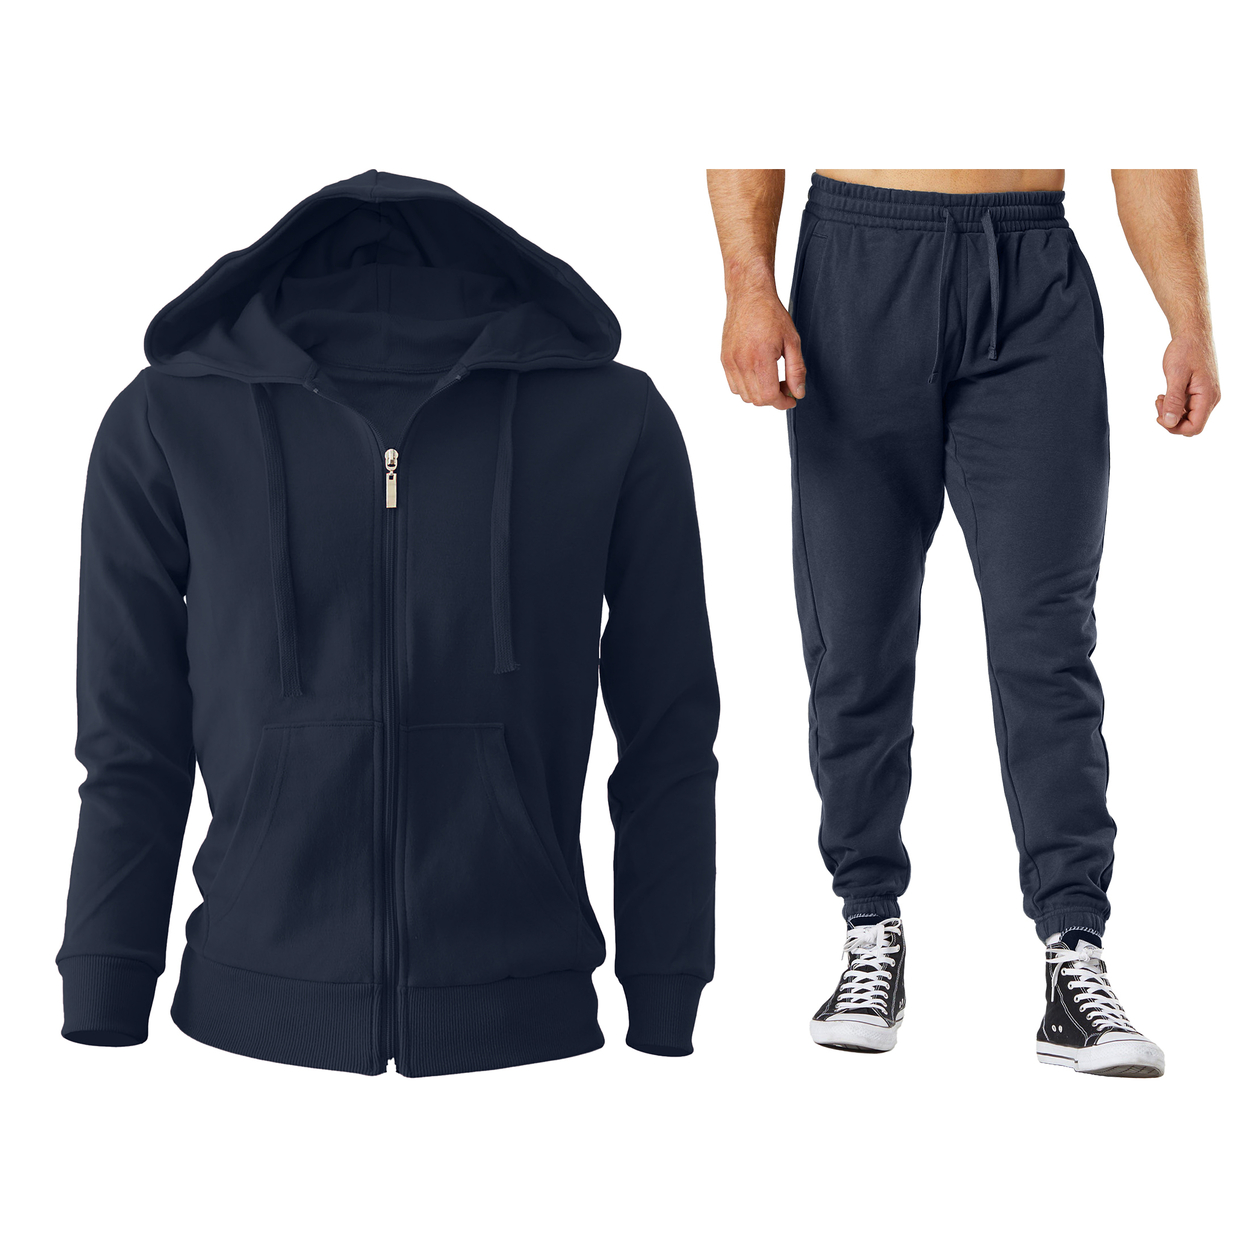 2/4-Piece: Men's Winter Warm Cozy Athletic Multi-Pockets BIG & TALL Sweatsuit Set - Charcoal, 2, 3xl